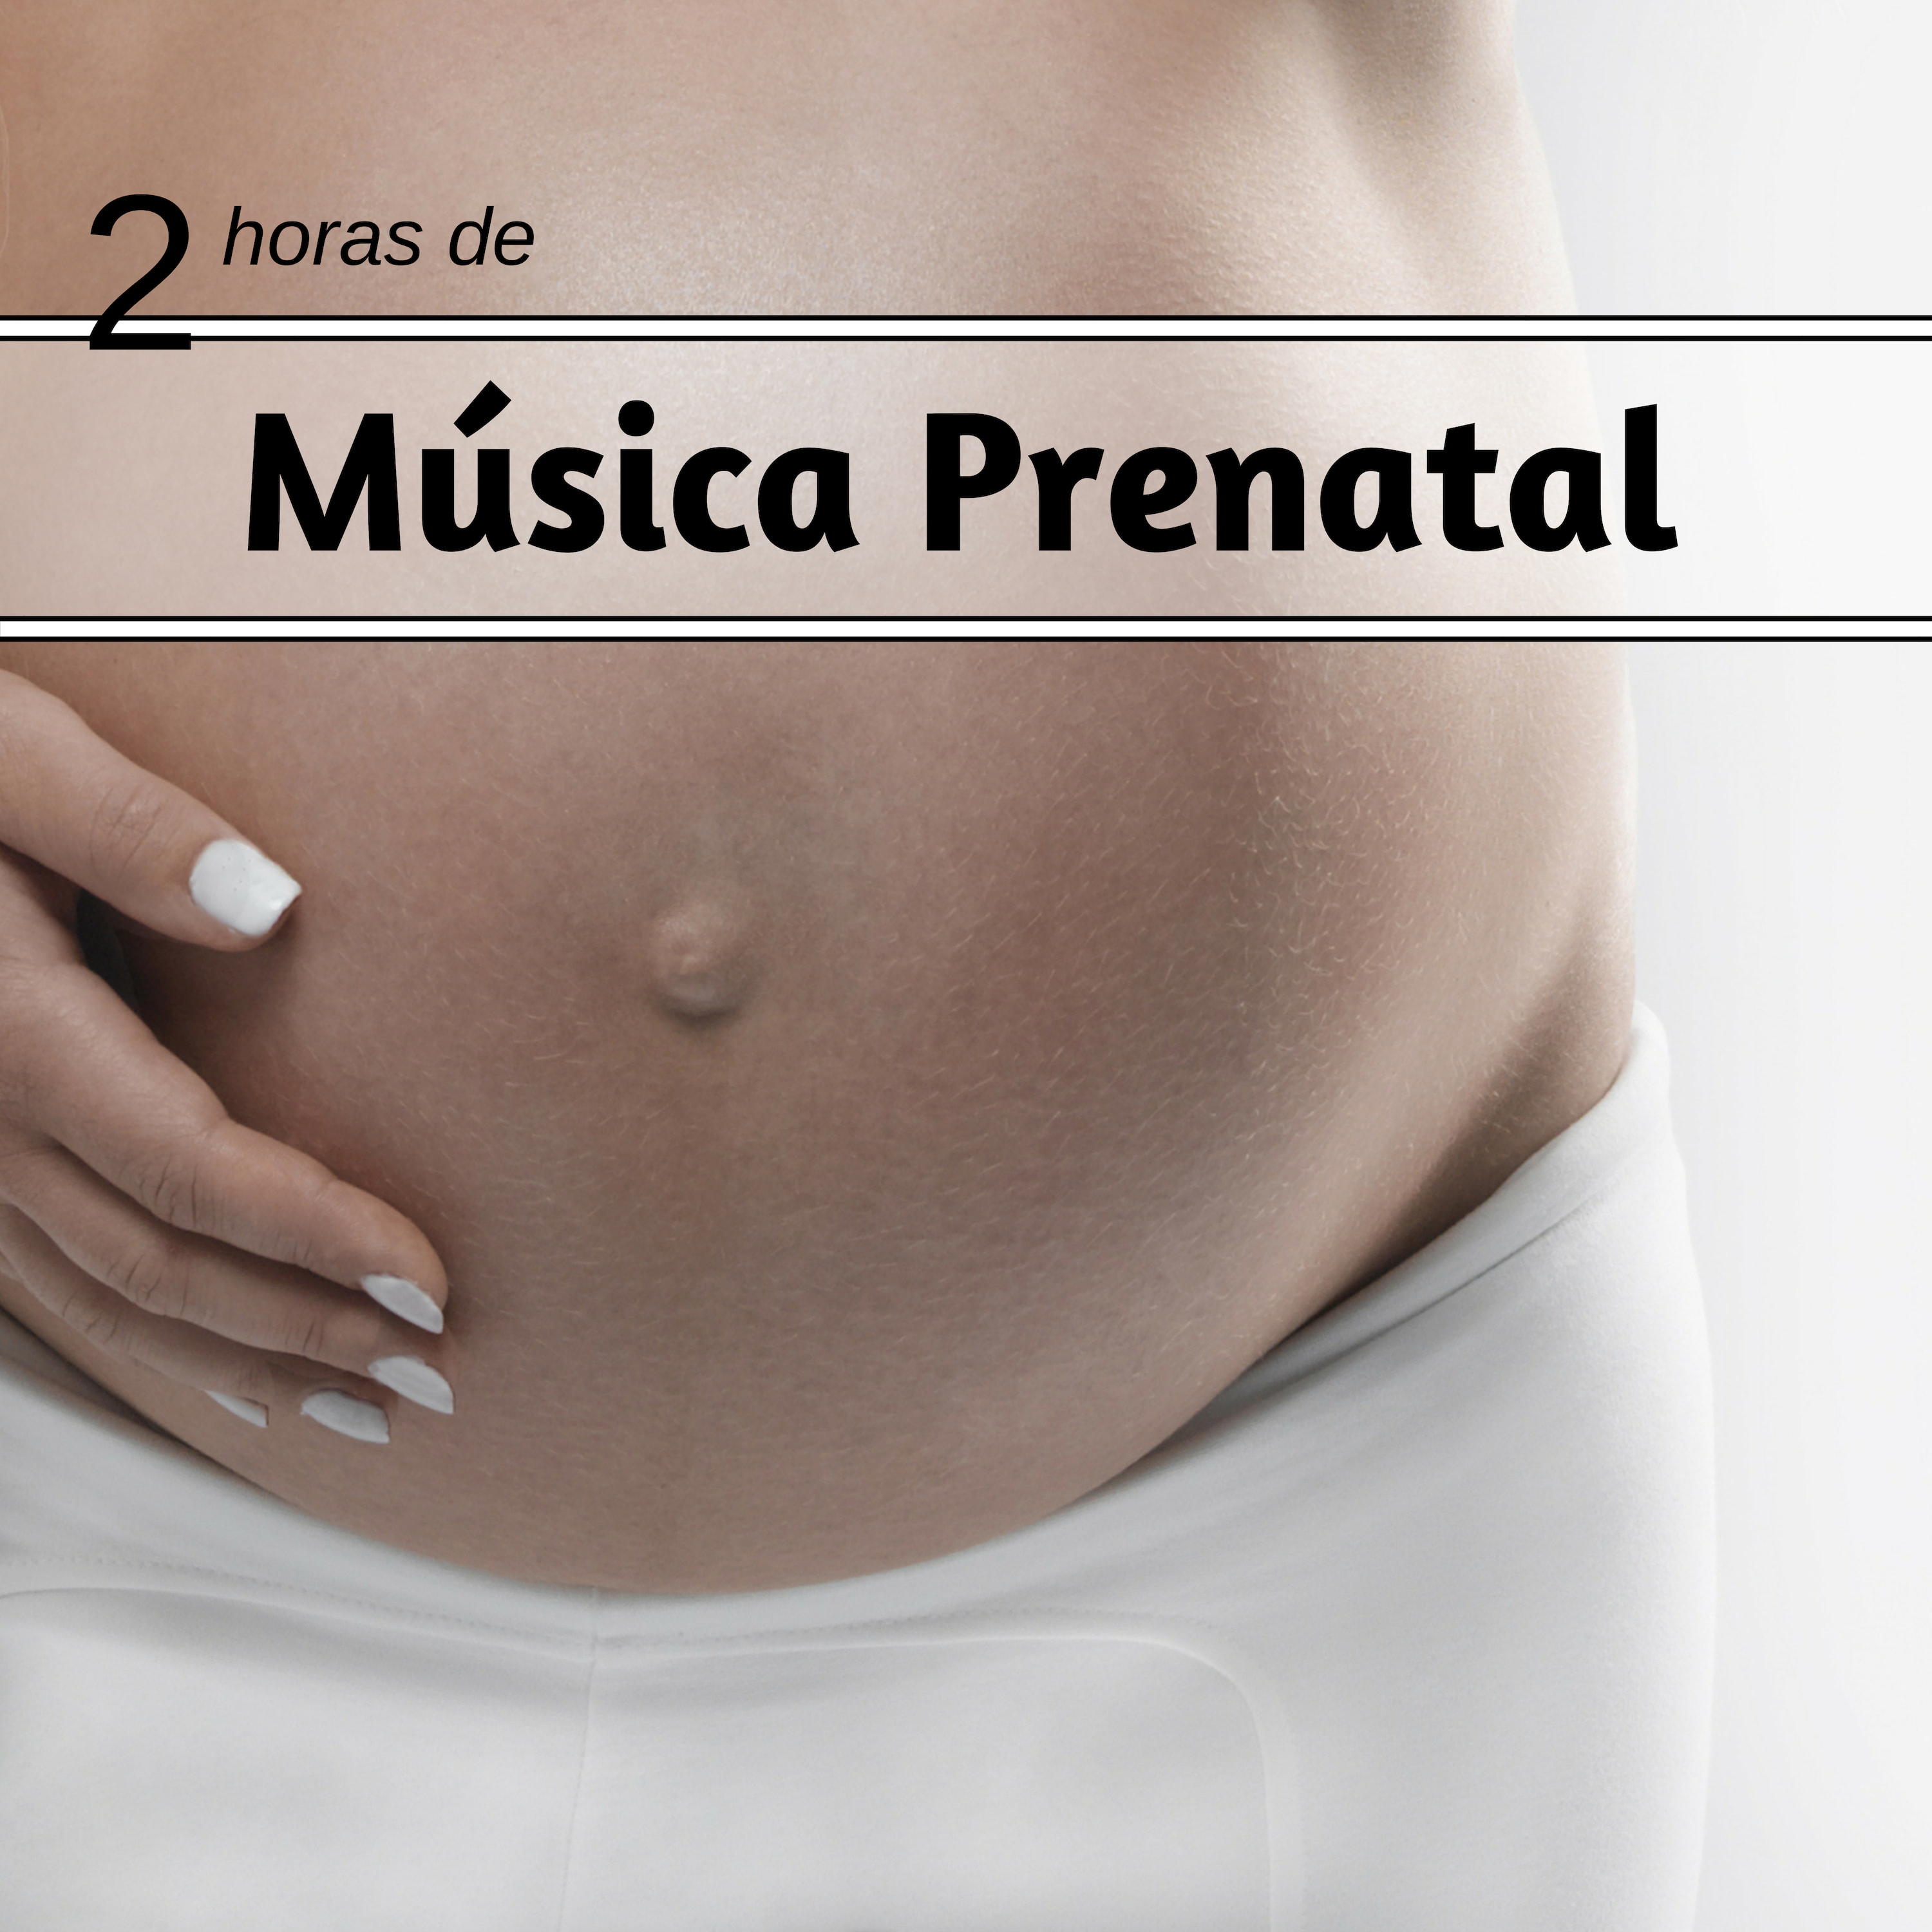 2 Horas de Mu sica Prenatal